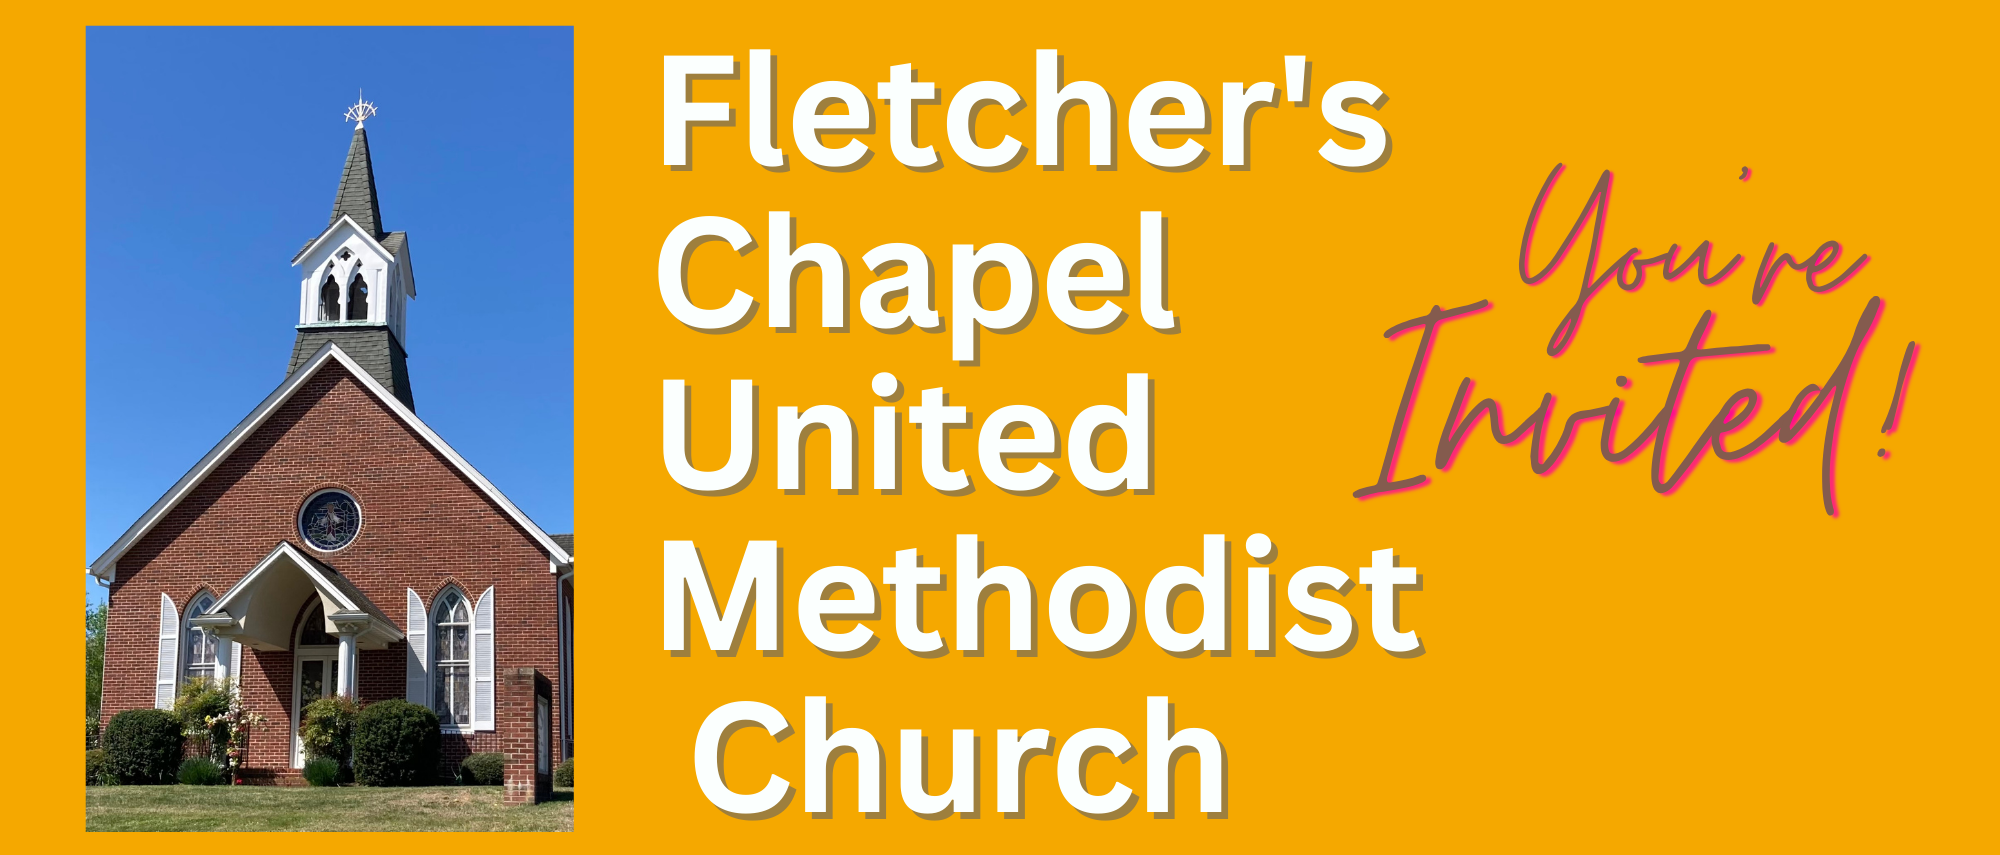 Fletcher's Chapel United Methodist Church – Sundays at 9 am